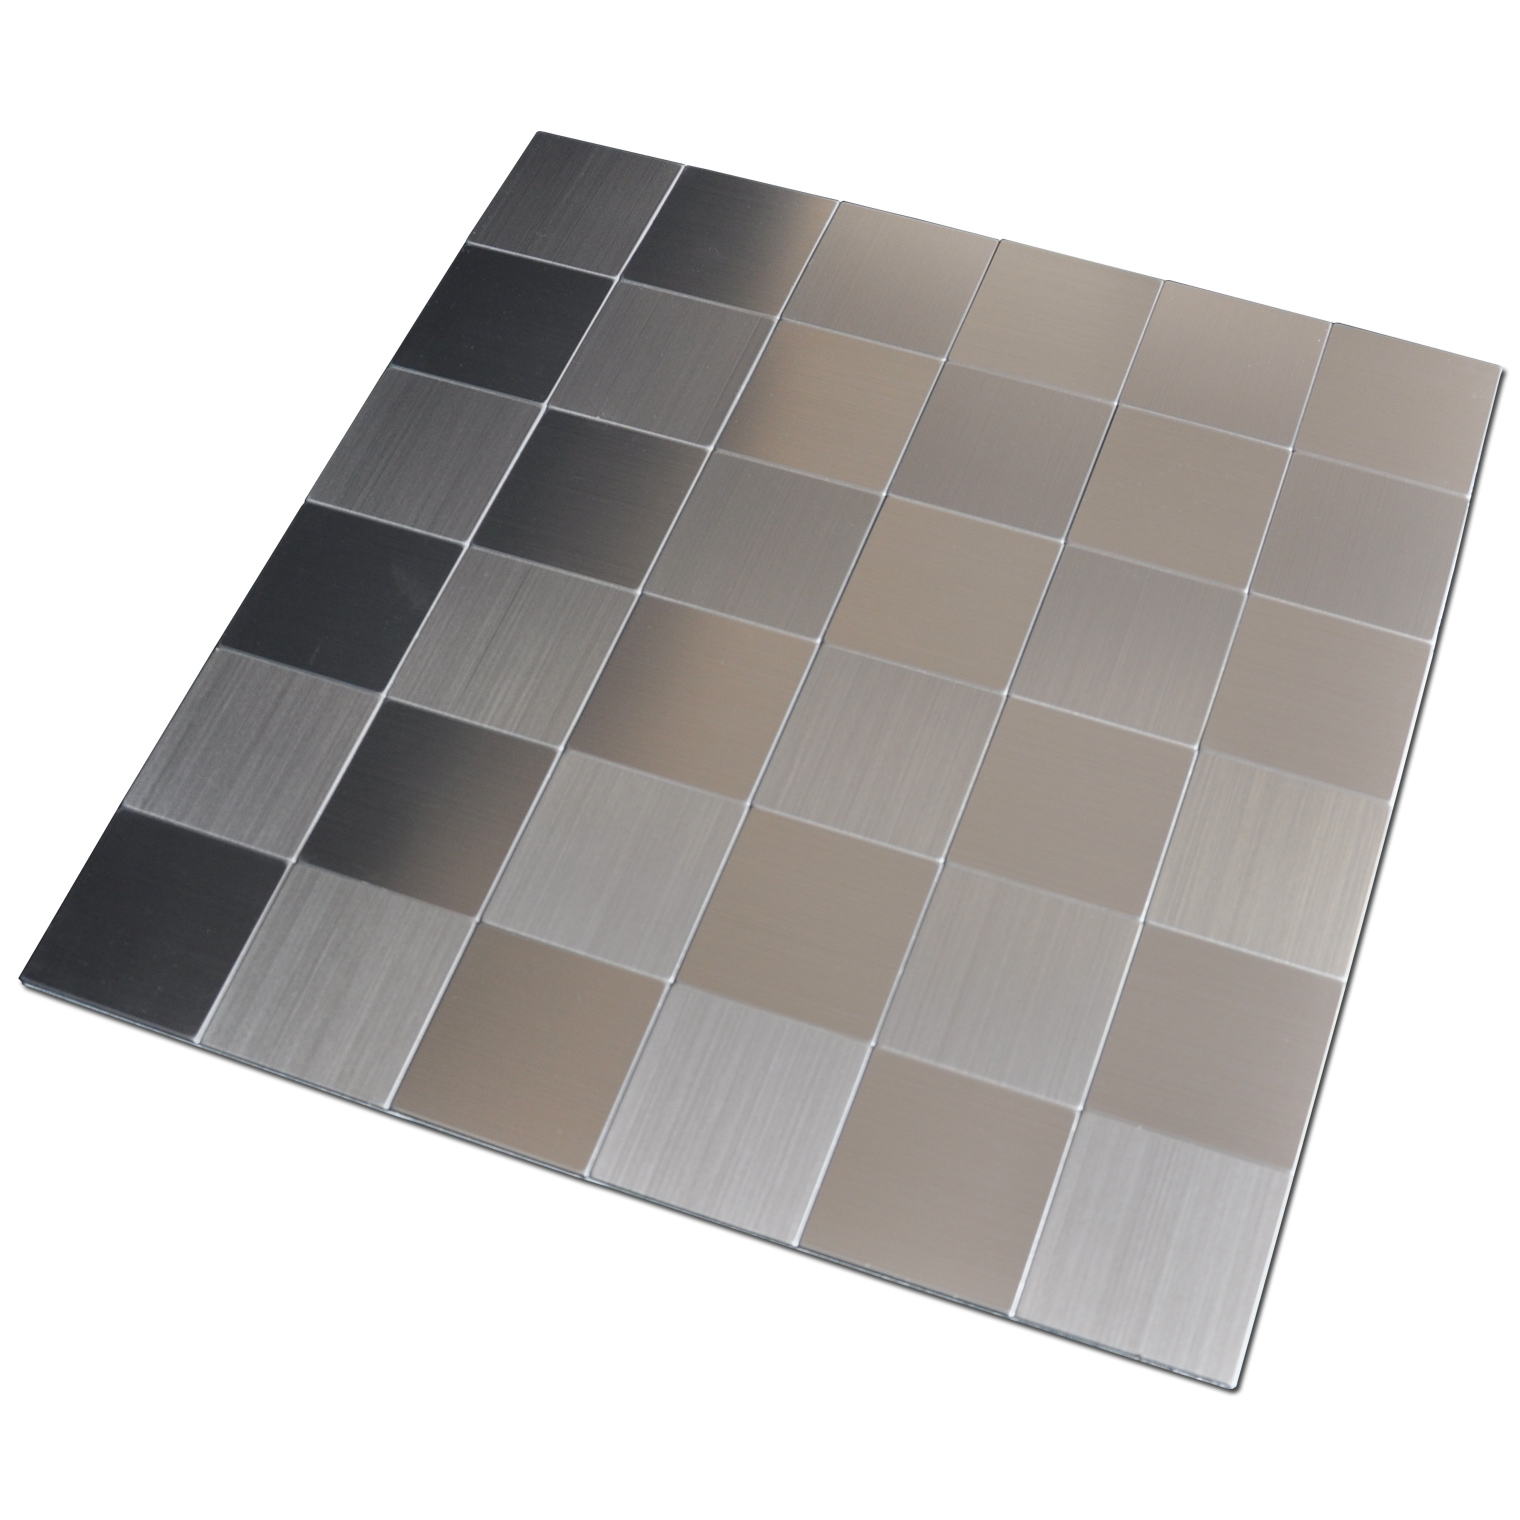 Self-adhesive Metal Tiles 10 Pcs Stainless Peel N Stick Backsplashes Peel N Stick Stainless Steel